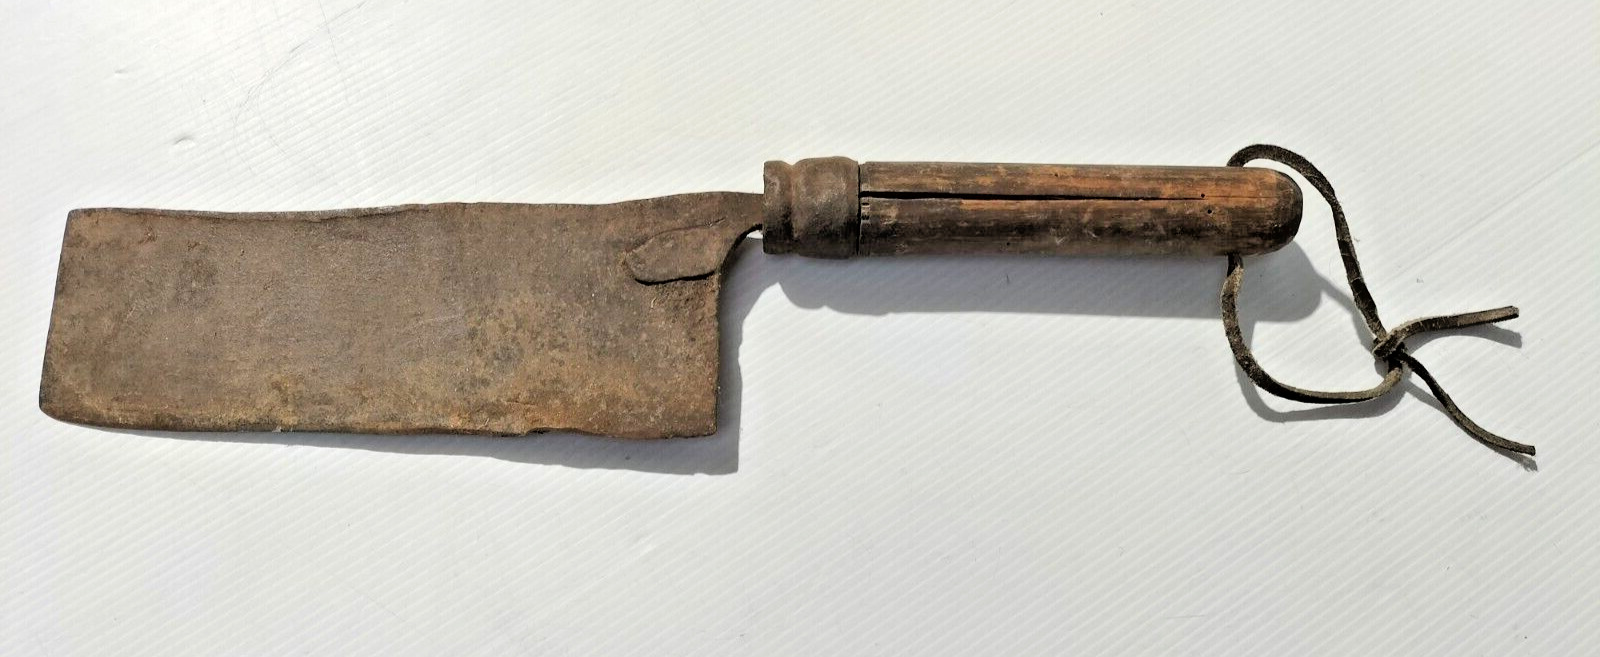 Antique Knife Butcher Cleaver Hatchet Machete Antique Knife - Rustic - As Found